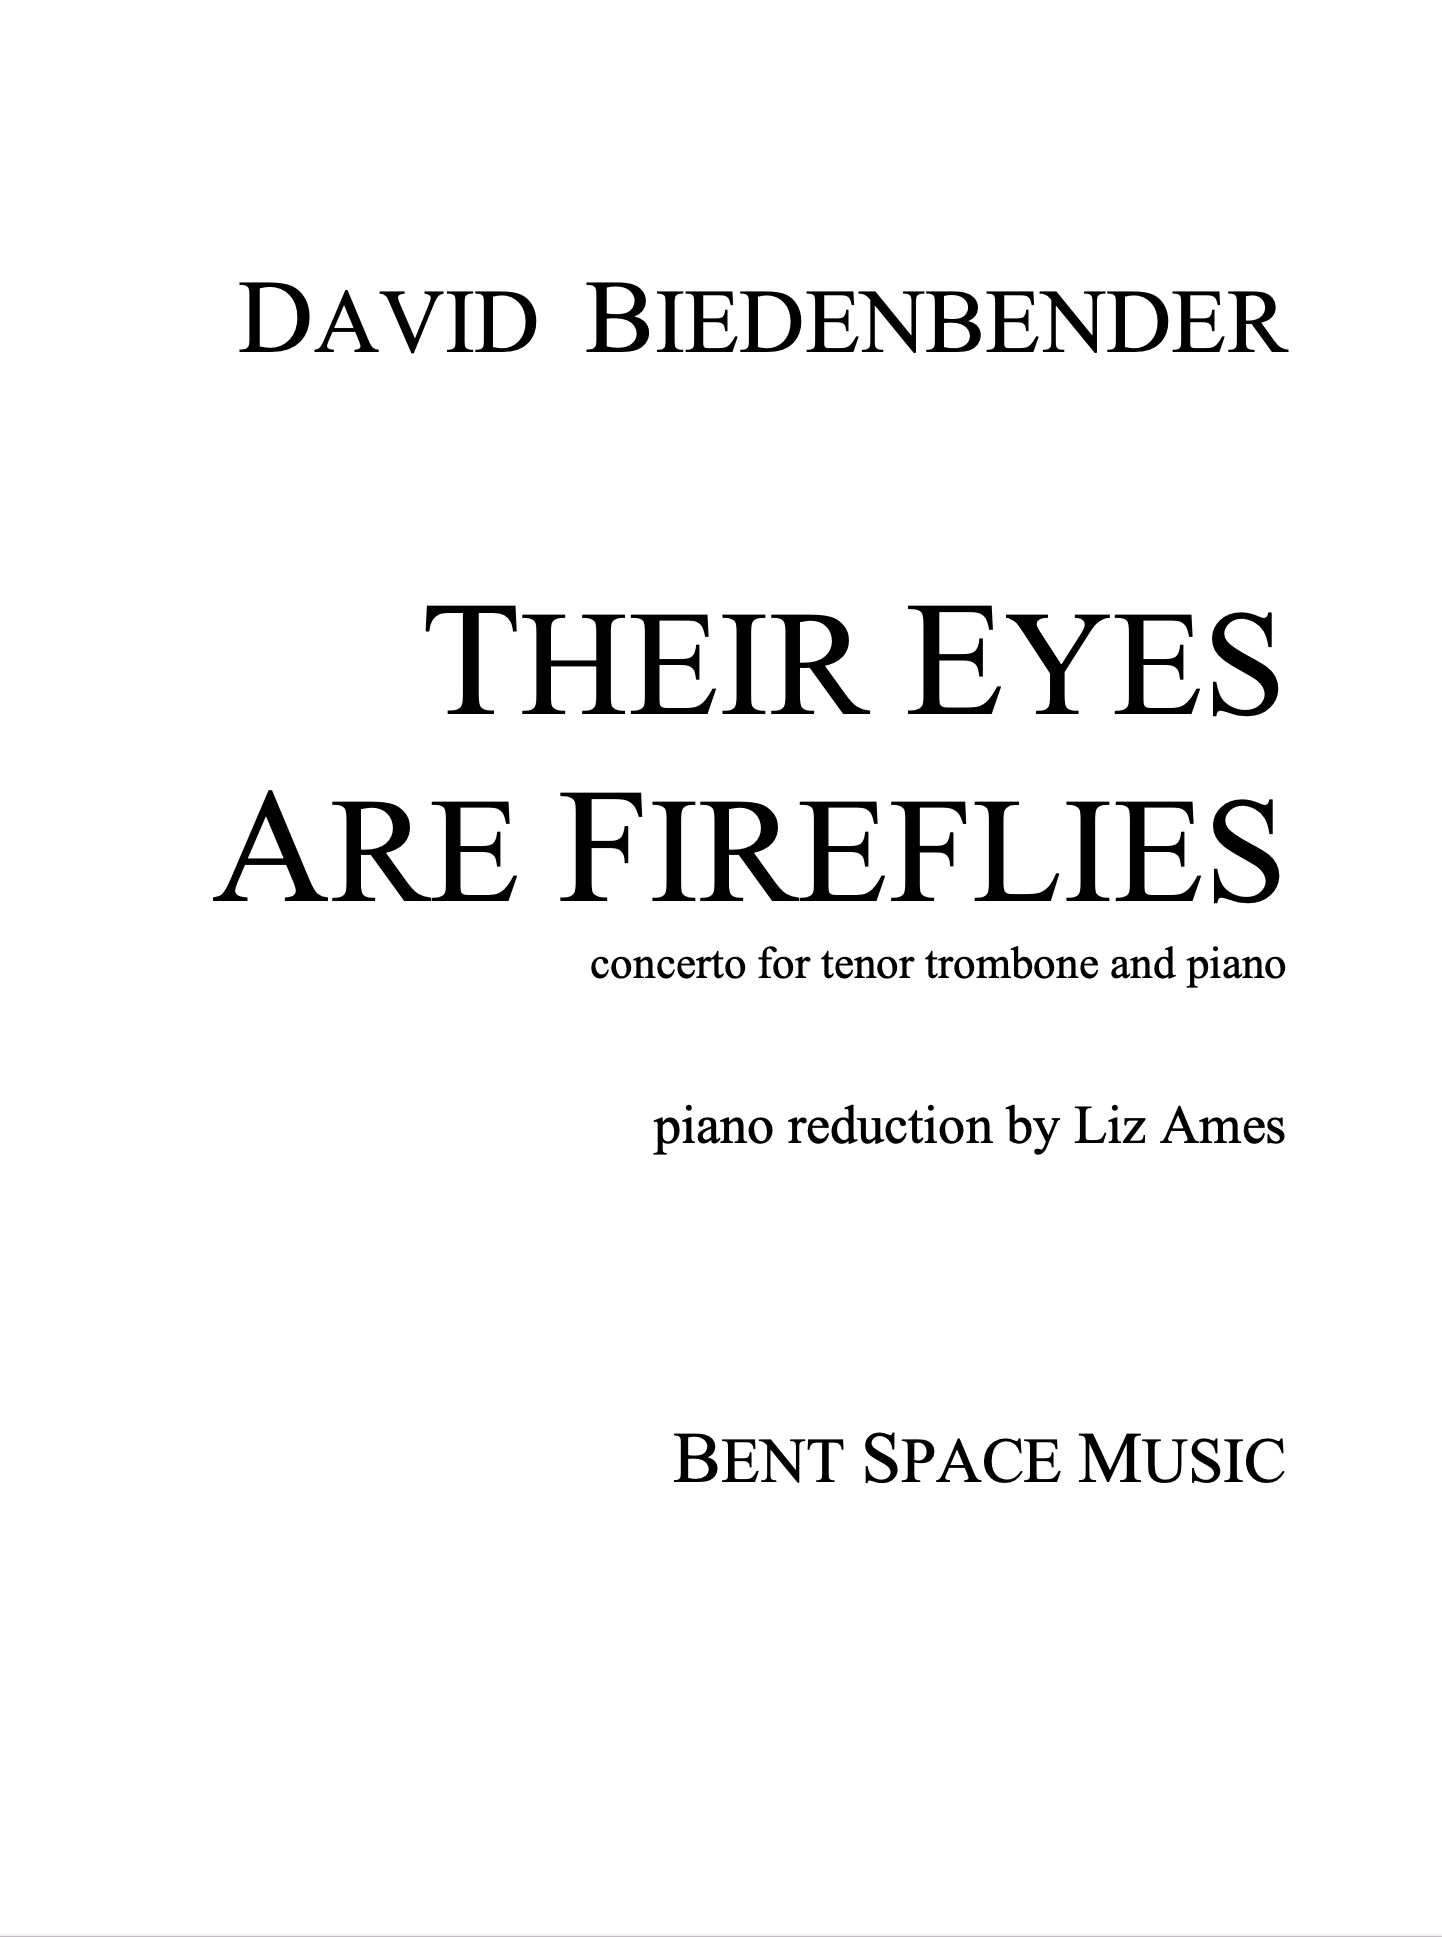 Their Eyes Are Fireflies (Piano Redution) by David Biedenbender